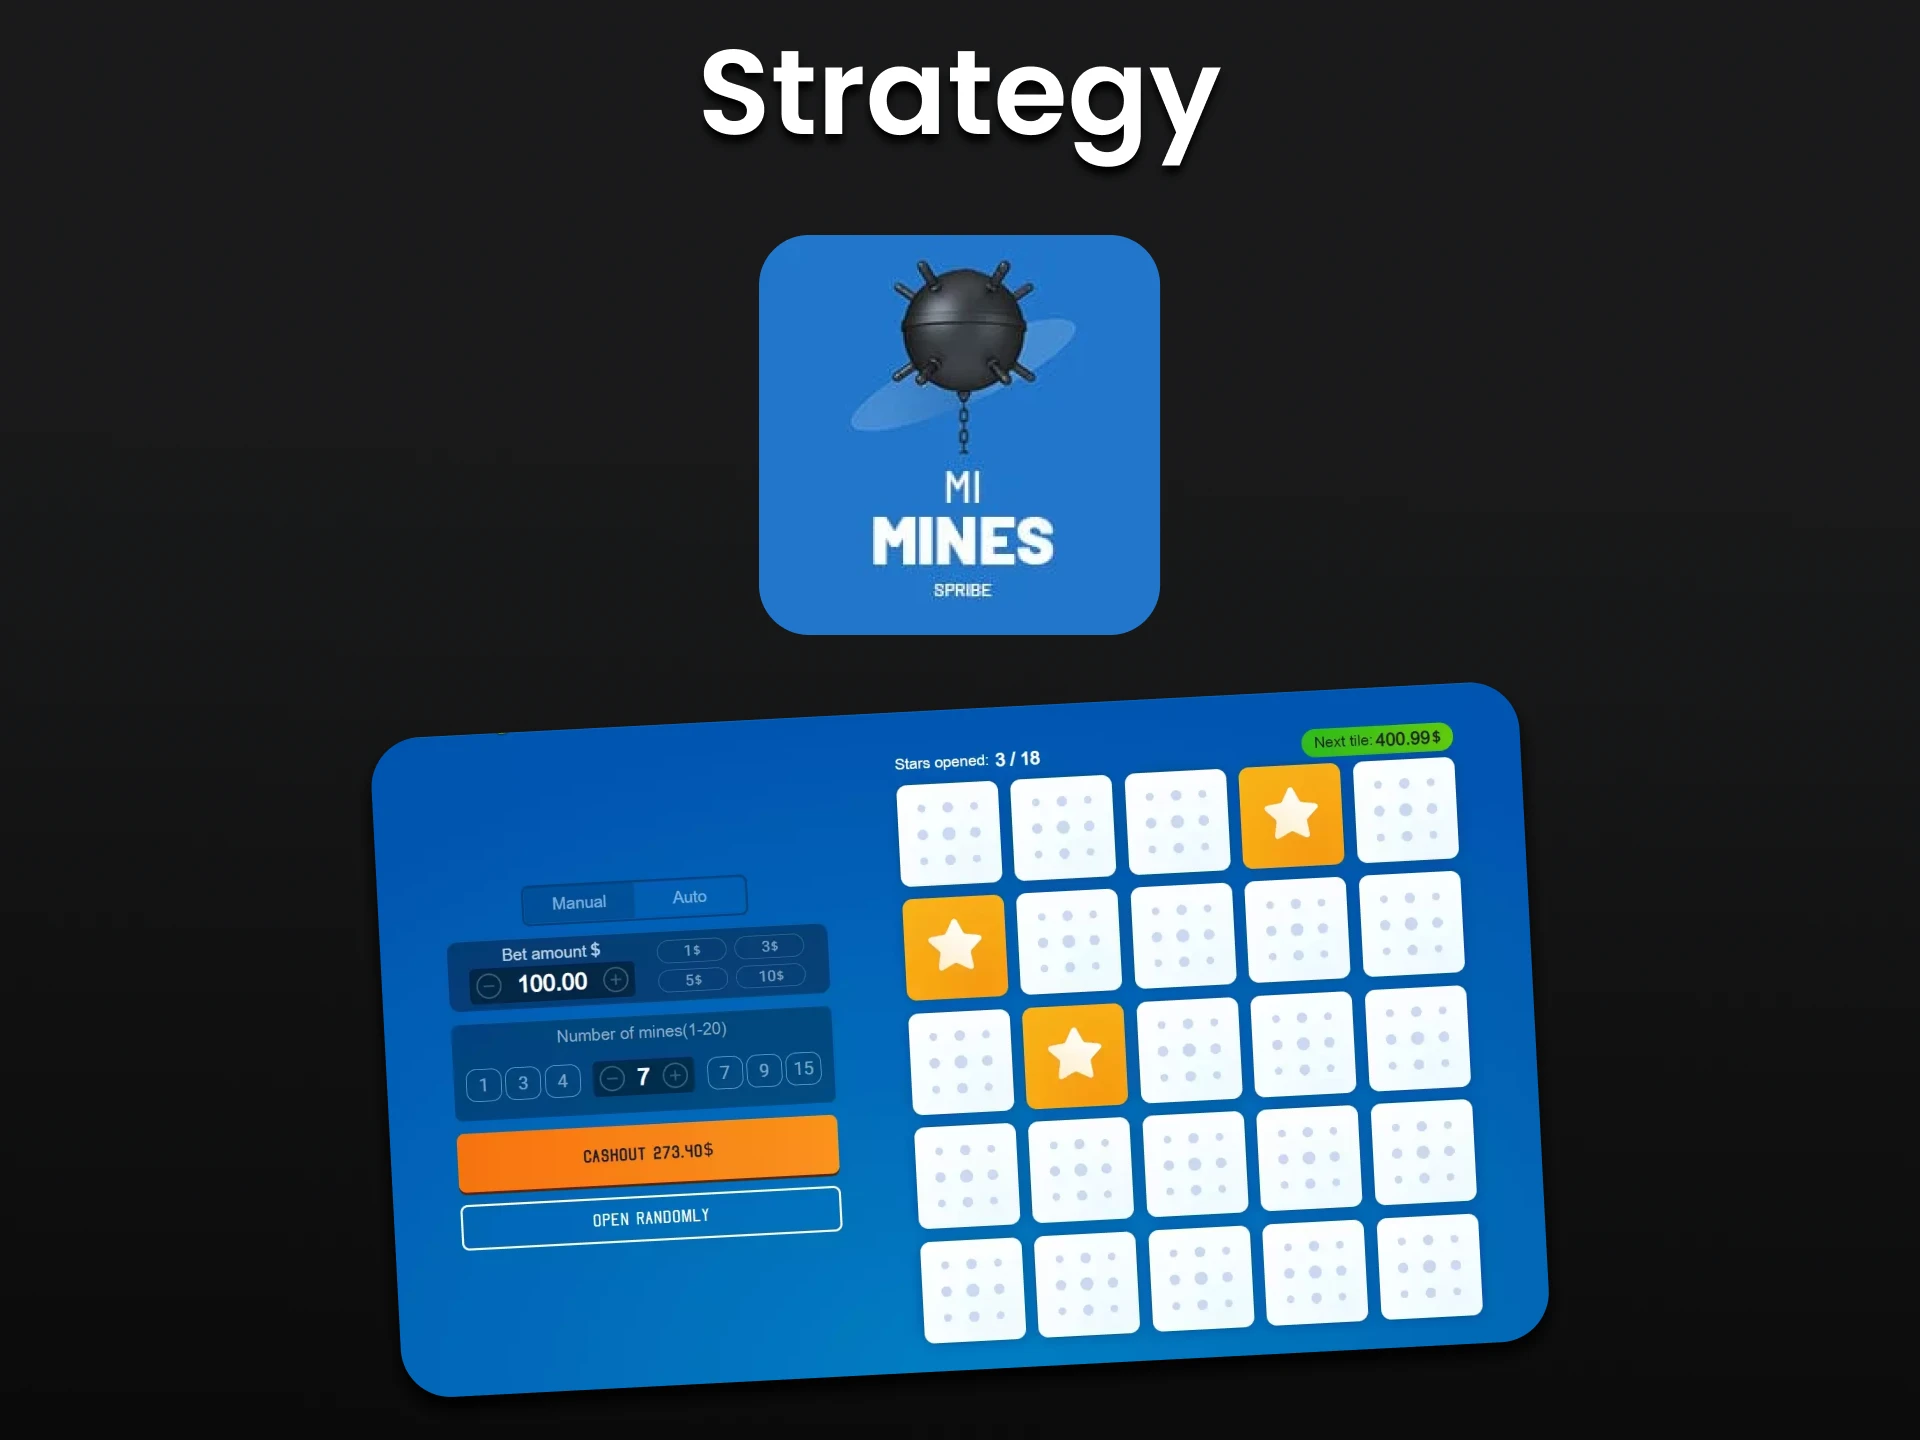 Learn strategies for winning Mines.